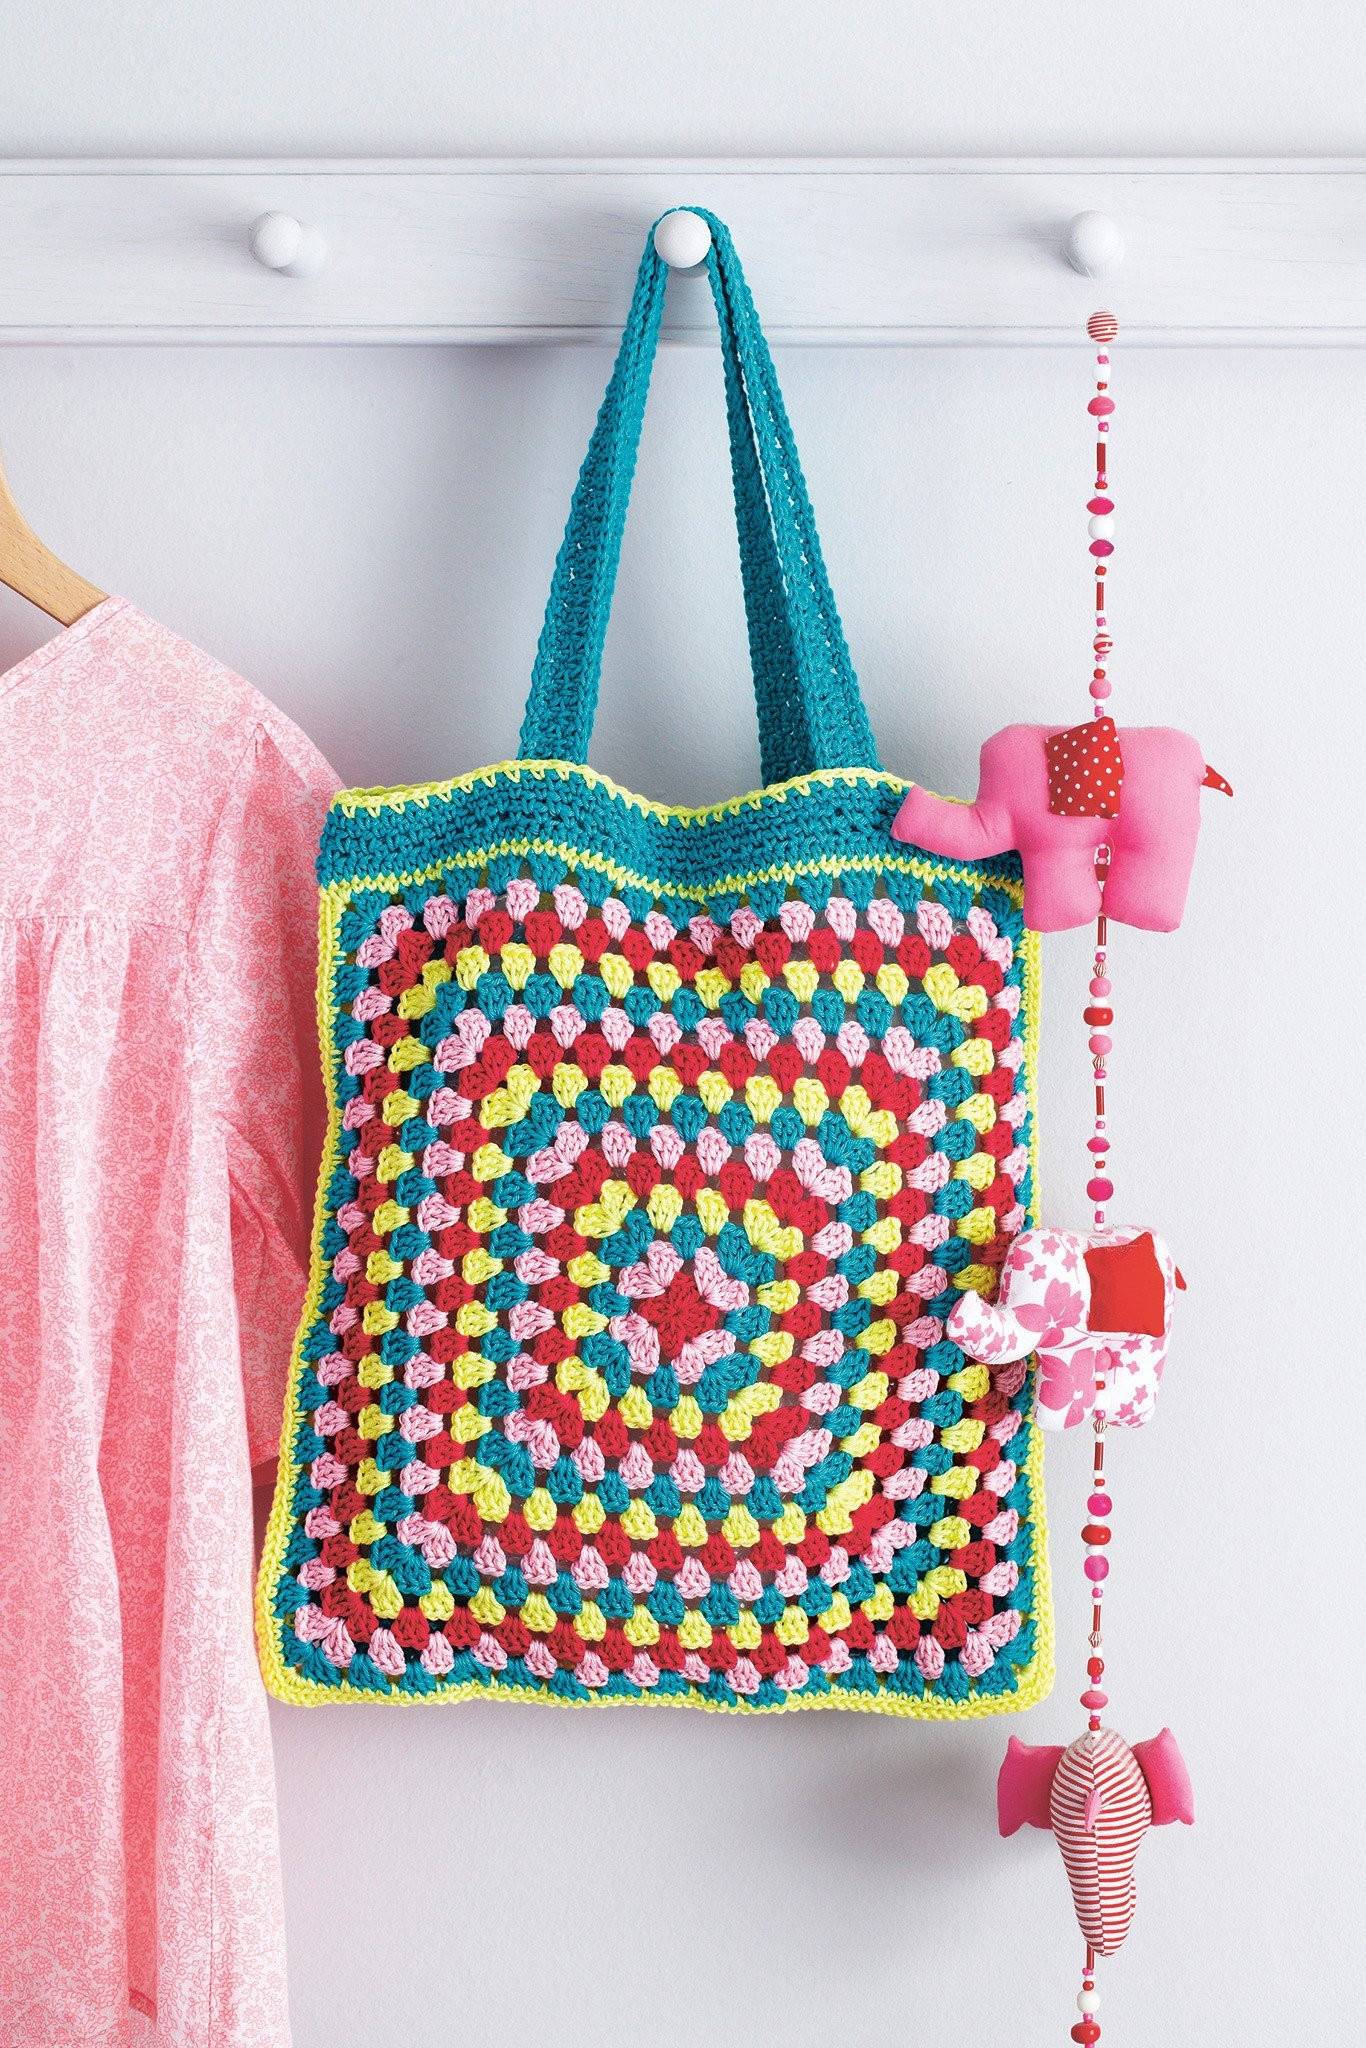 Granny Square Bag Crochet Pattern The Knitting Network